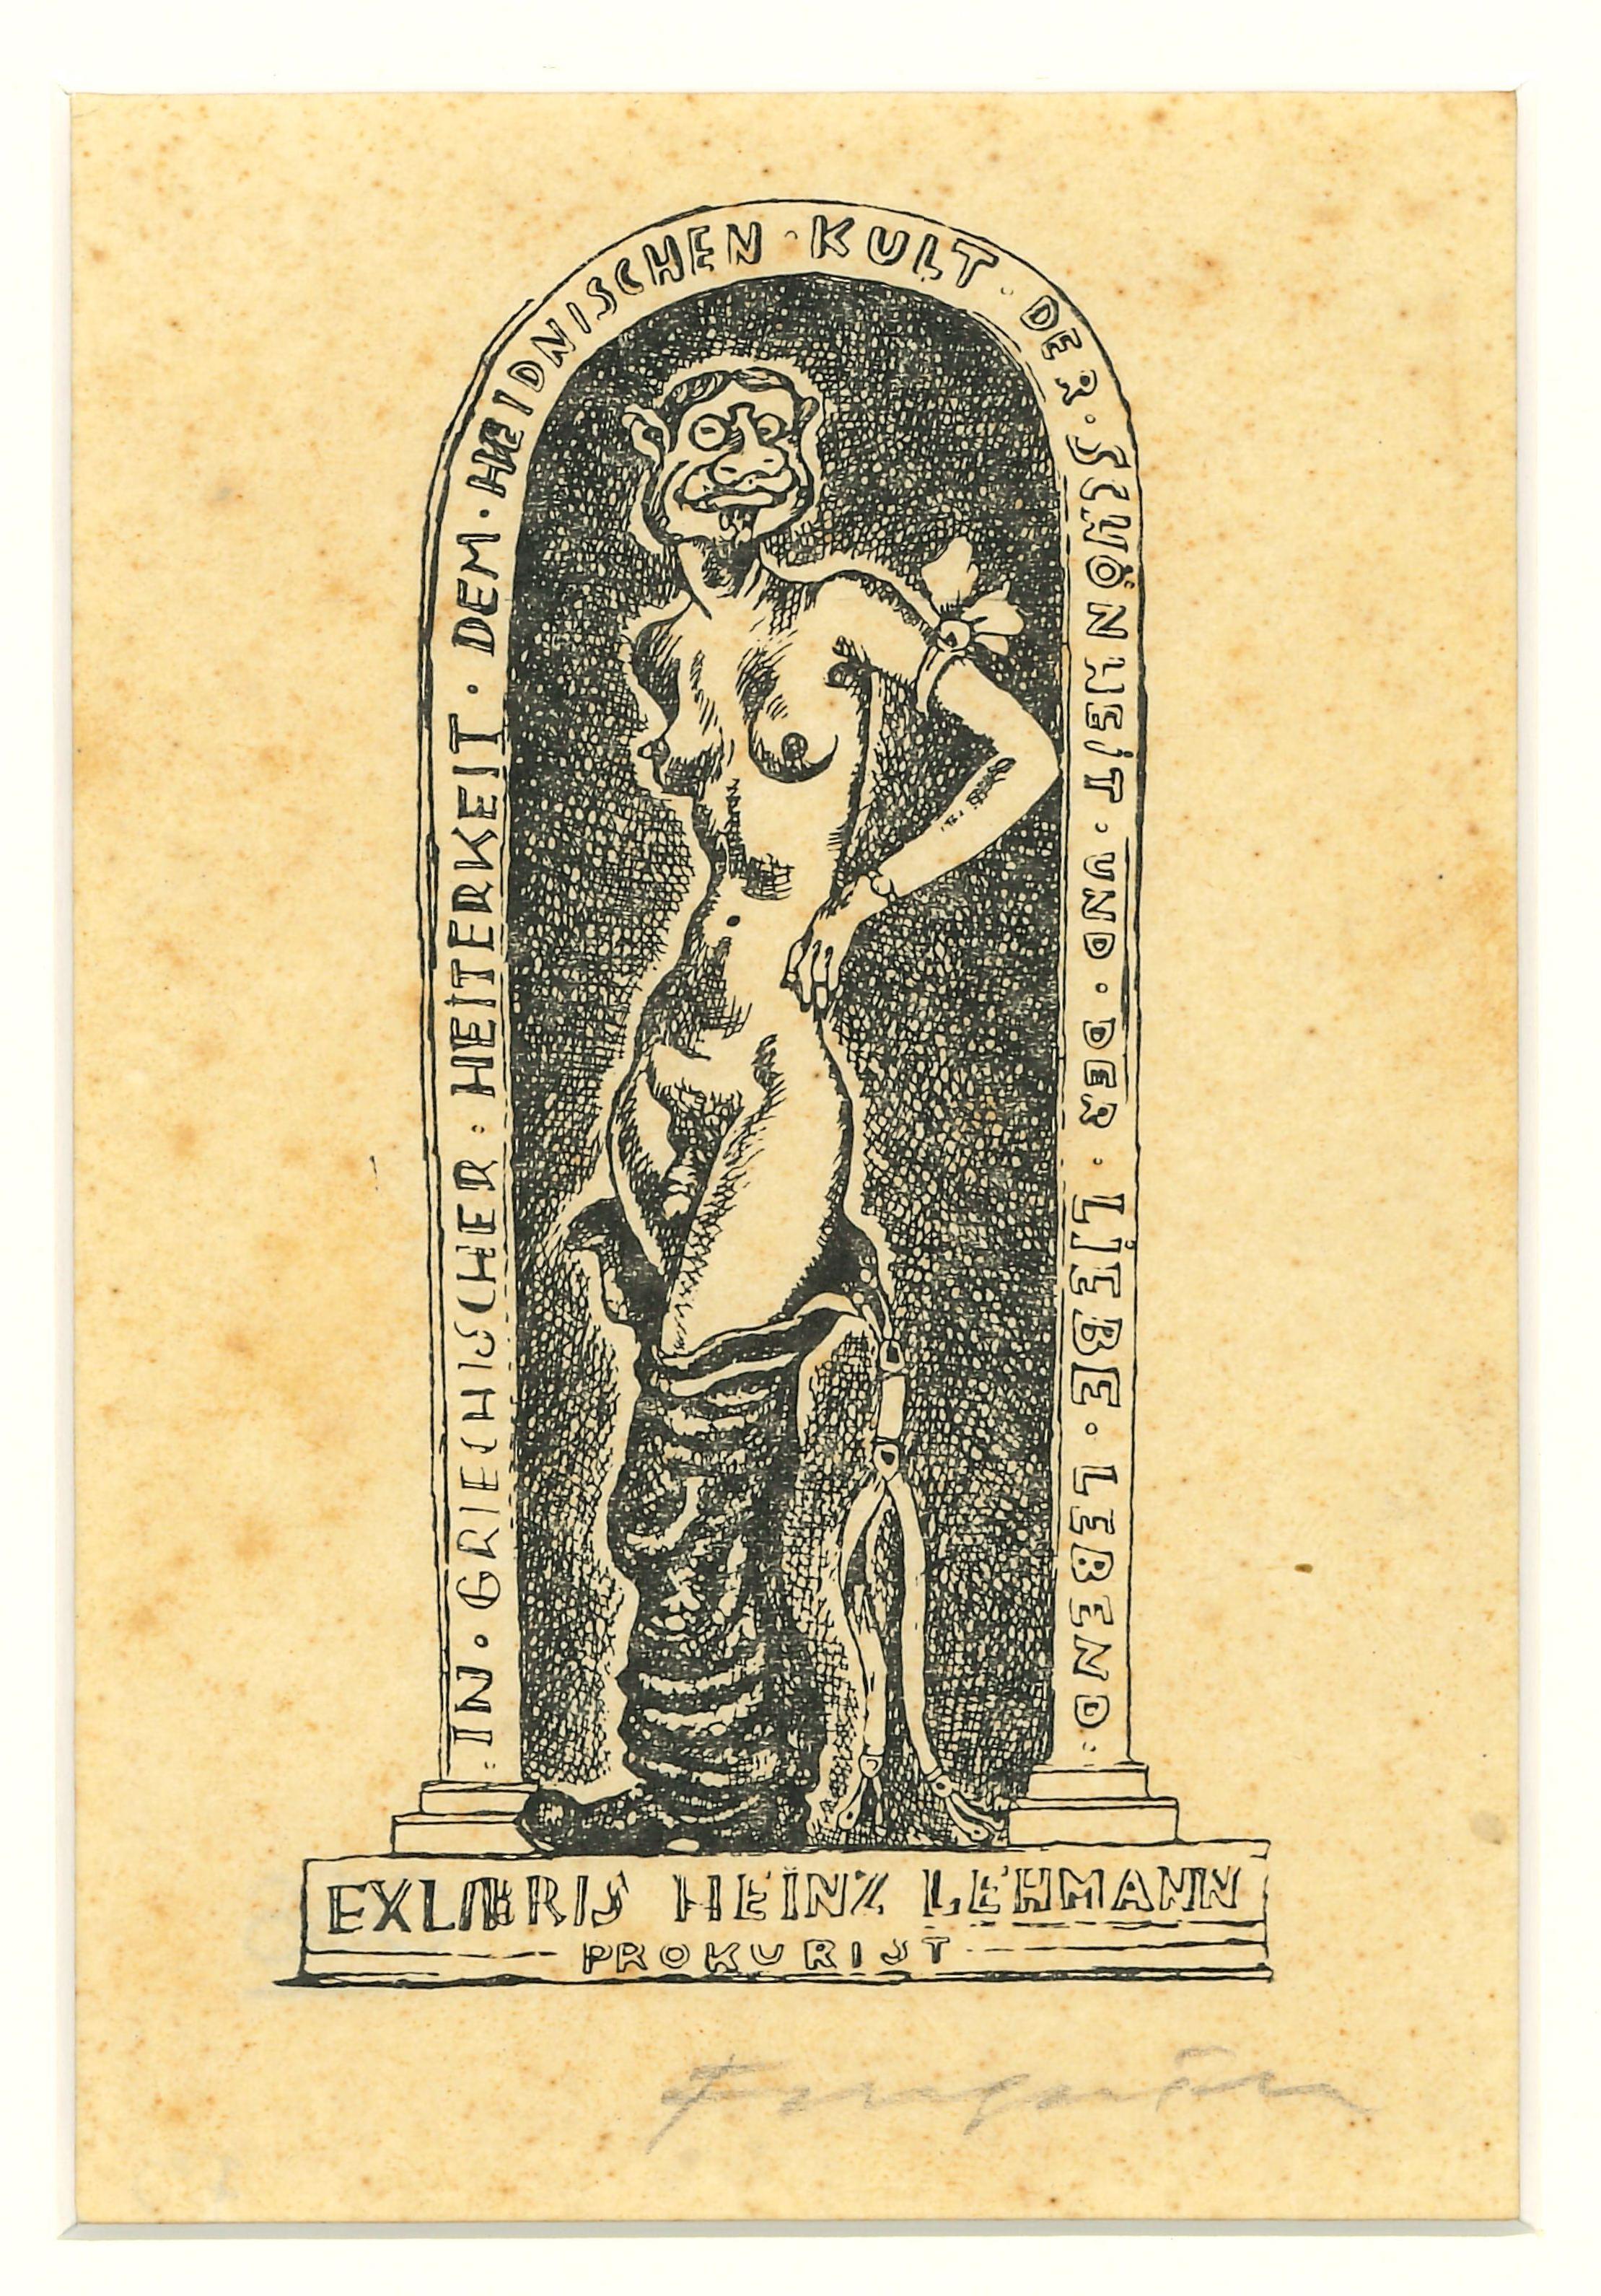 Michel Fingesten Figurative Print - Ex Libris Heinz Lehmann - Original Woodcut by M. Fingesten - Early 1900